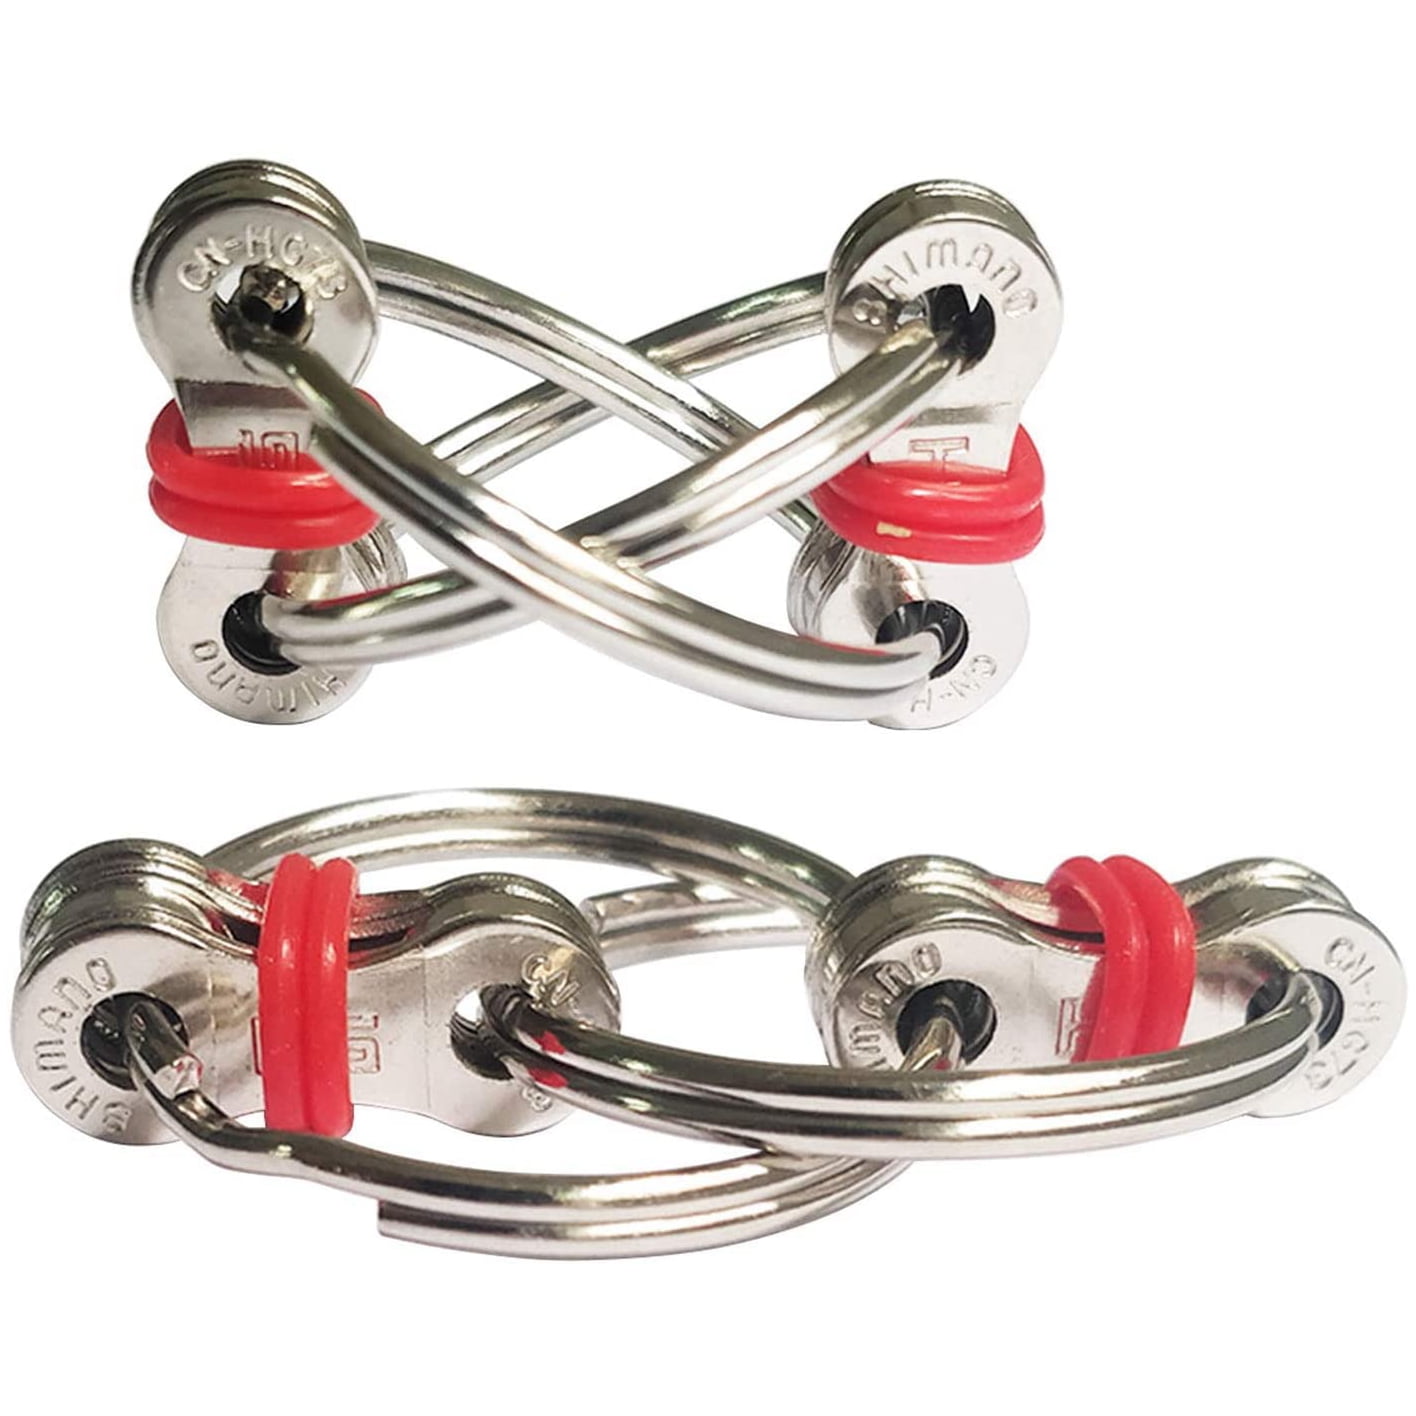 Hot Flippy Chain Ring EDC Toy Hand Spinner Anxiety Stress Relieve vbukPTUVNJha